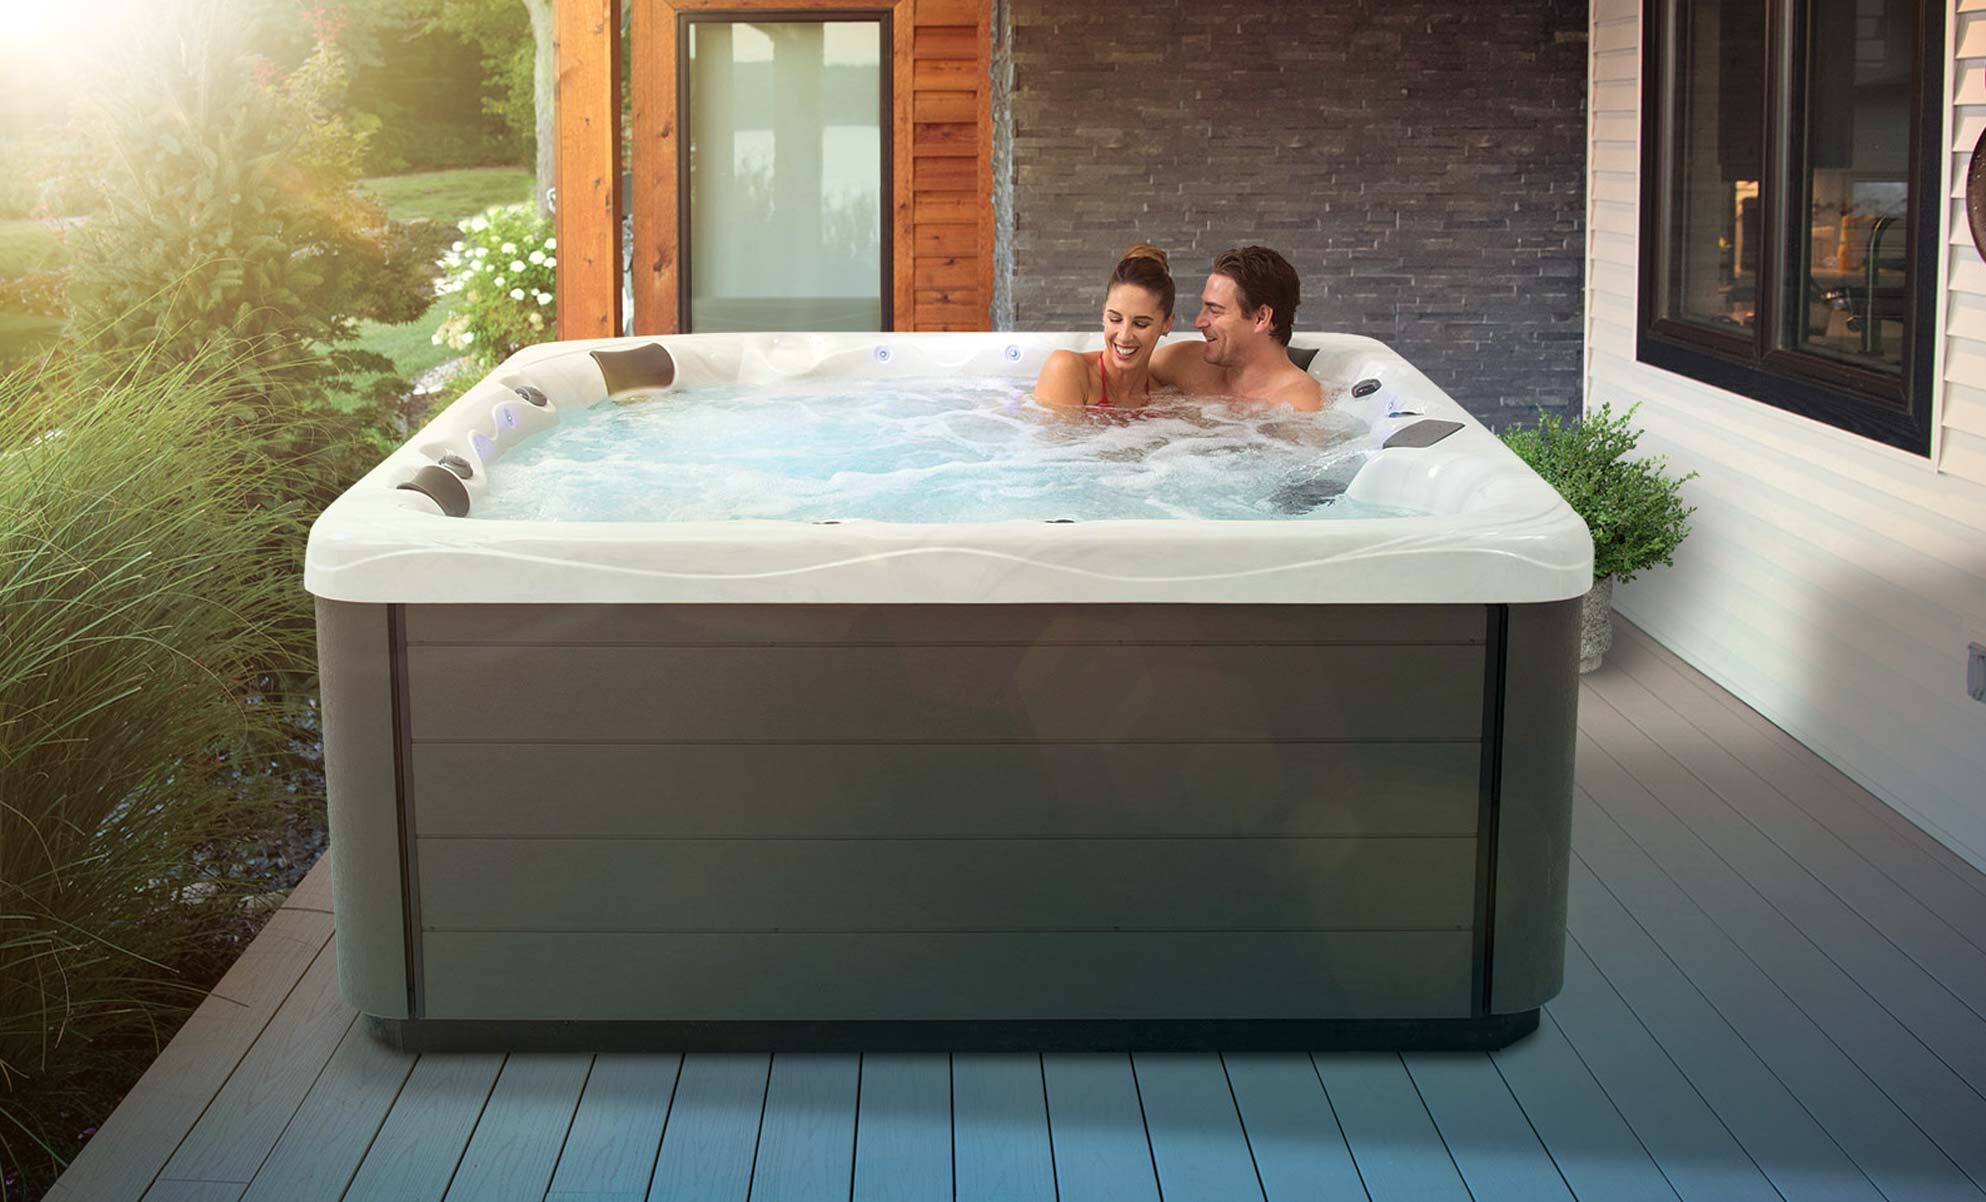 Balance 7 Hot Tub Model from Clarity Spas